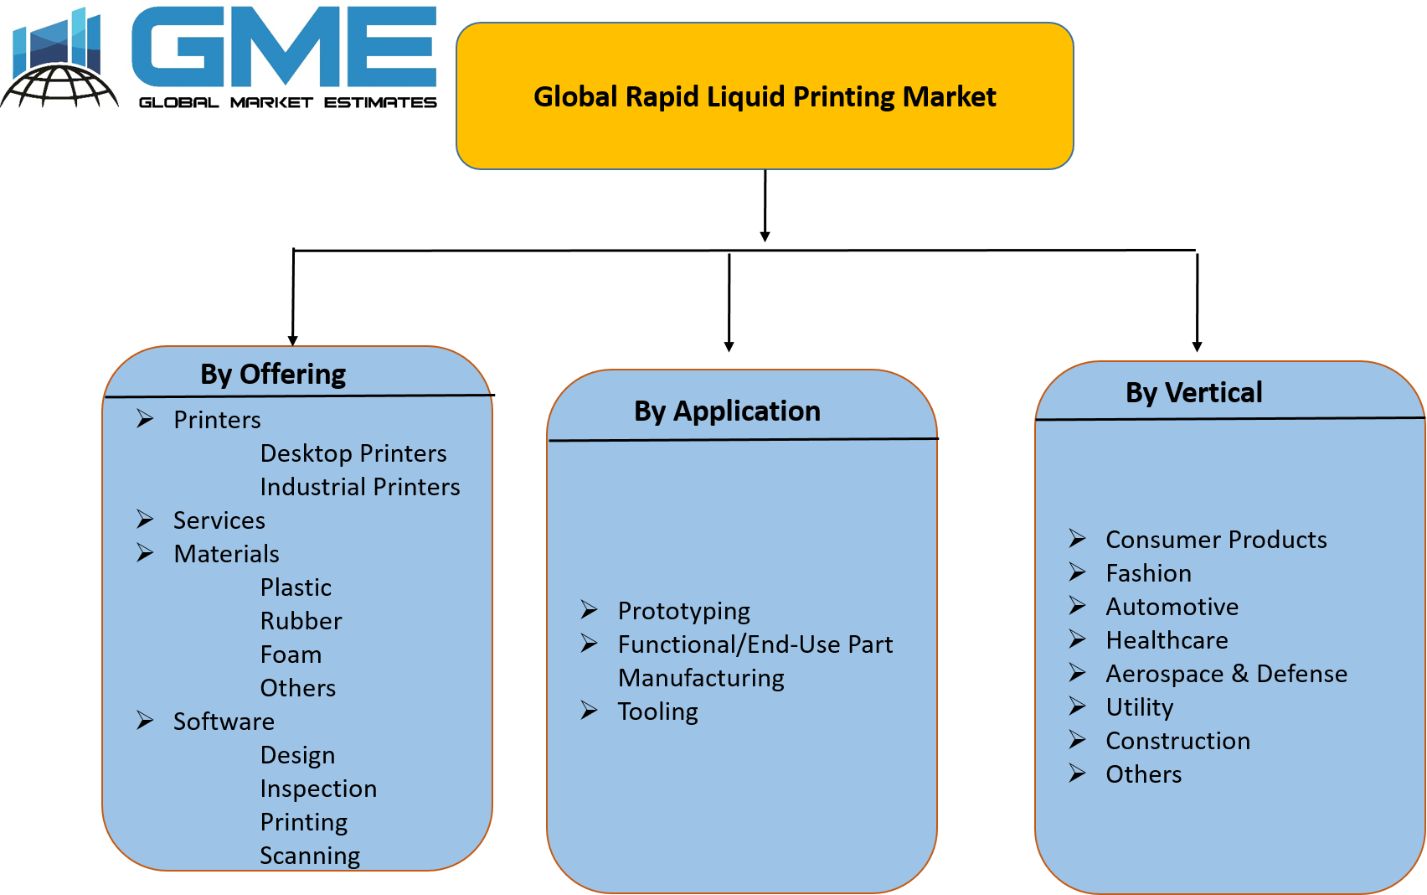 Global Rapid Liquid Printing Market - Segments